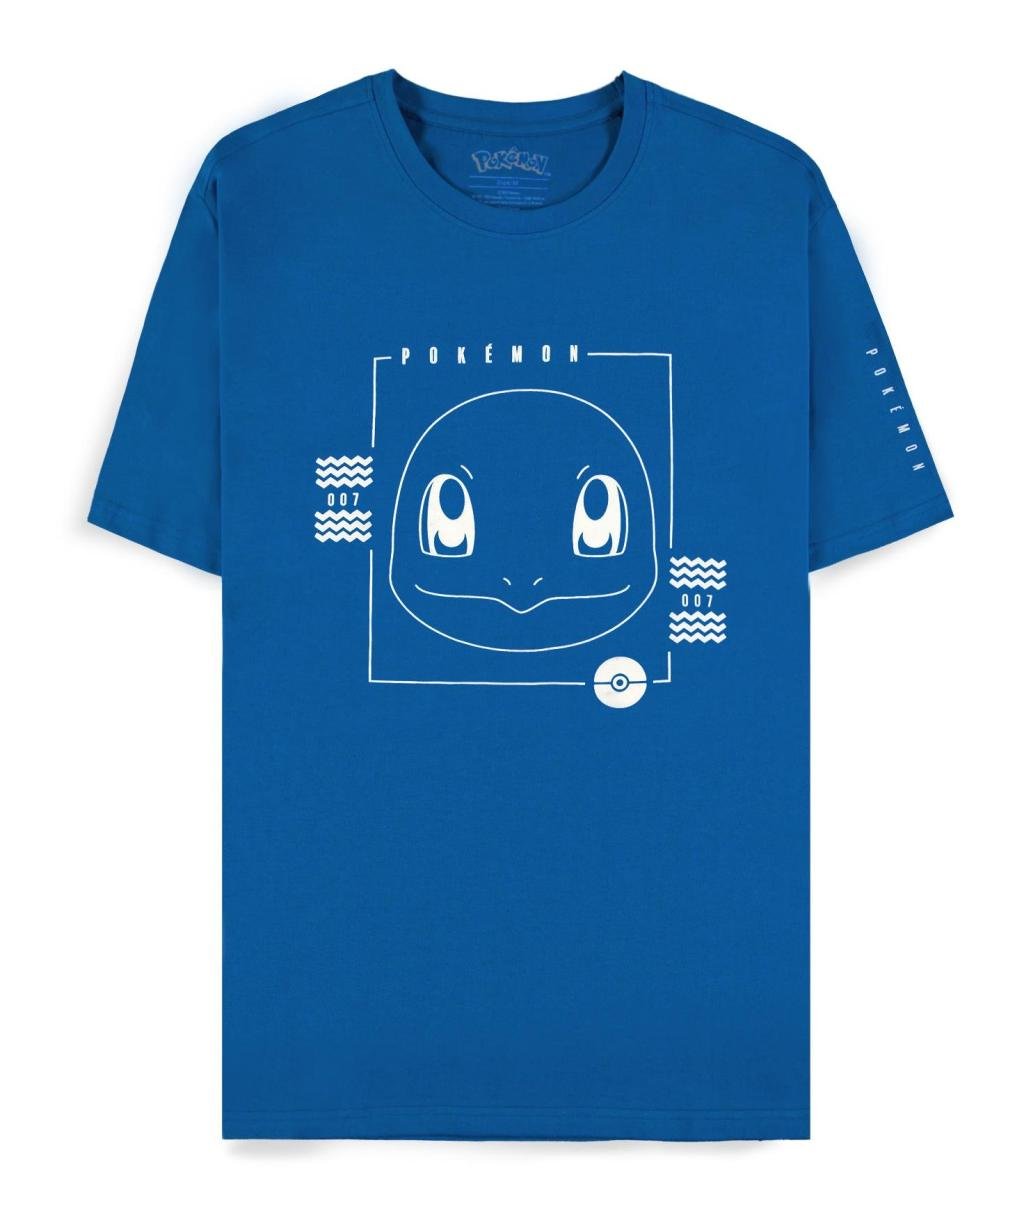 POKEMON - Blue Squirtle - Men's T-shirt (S)